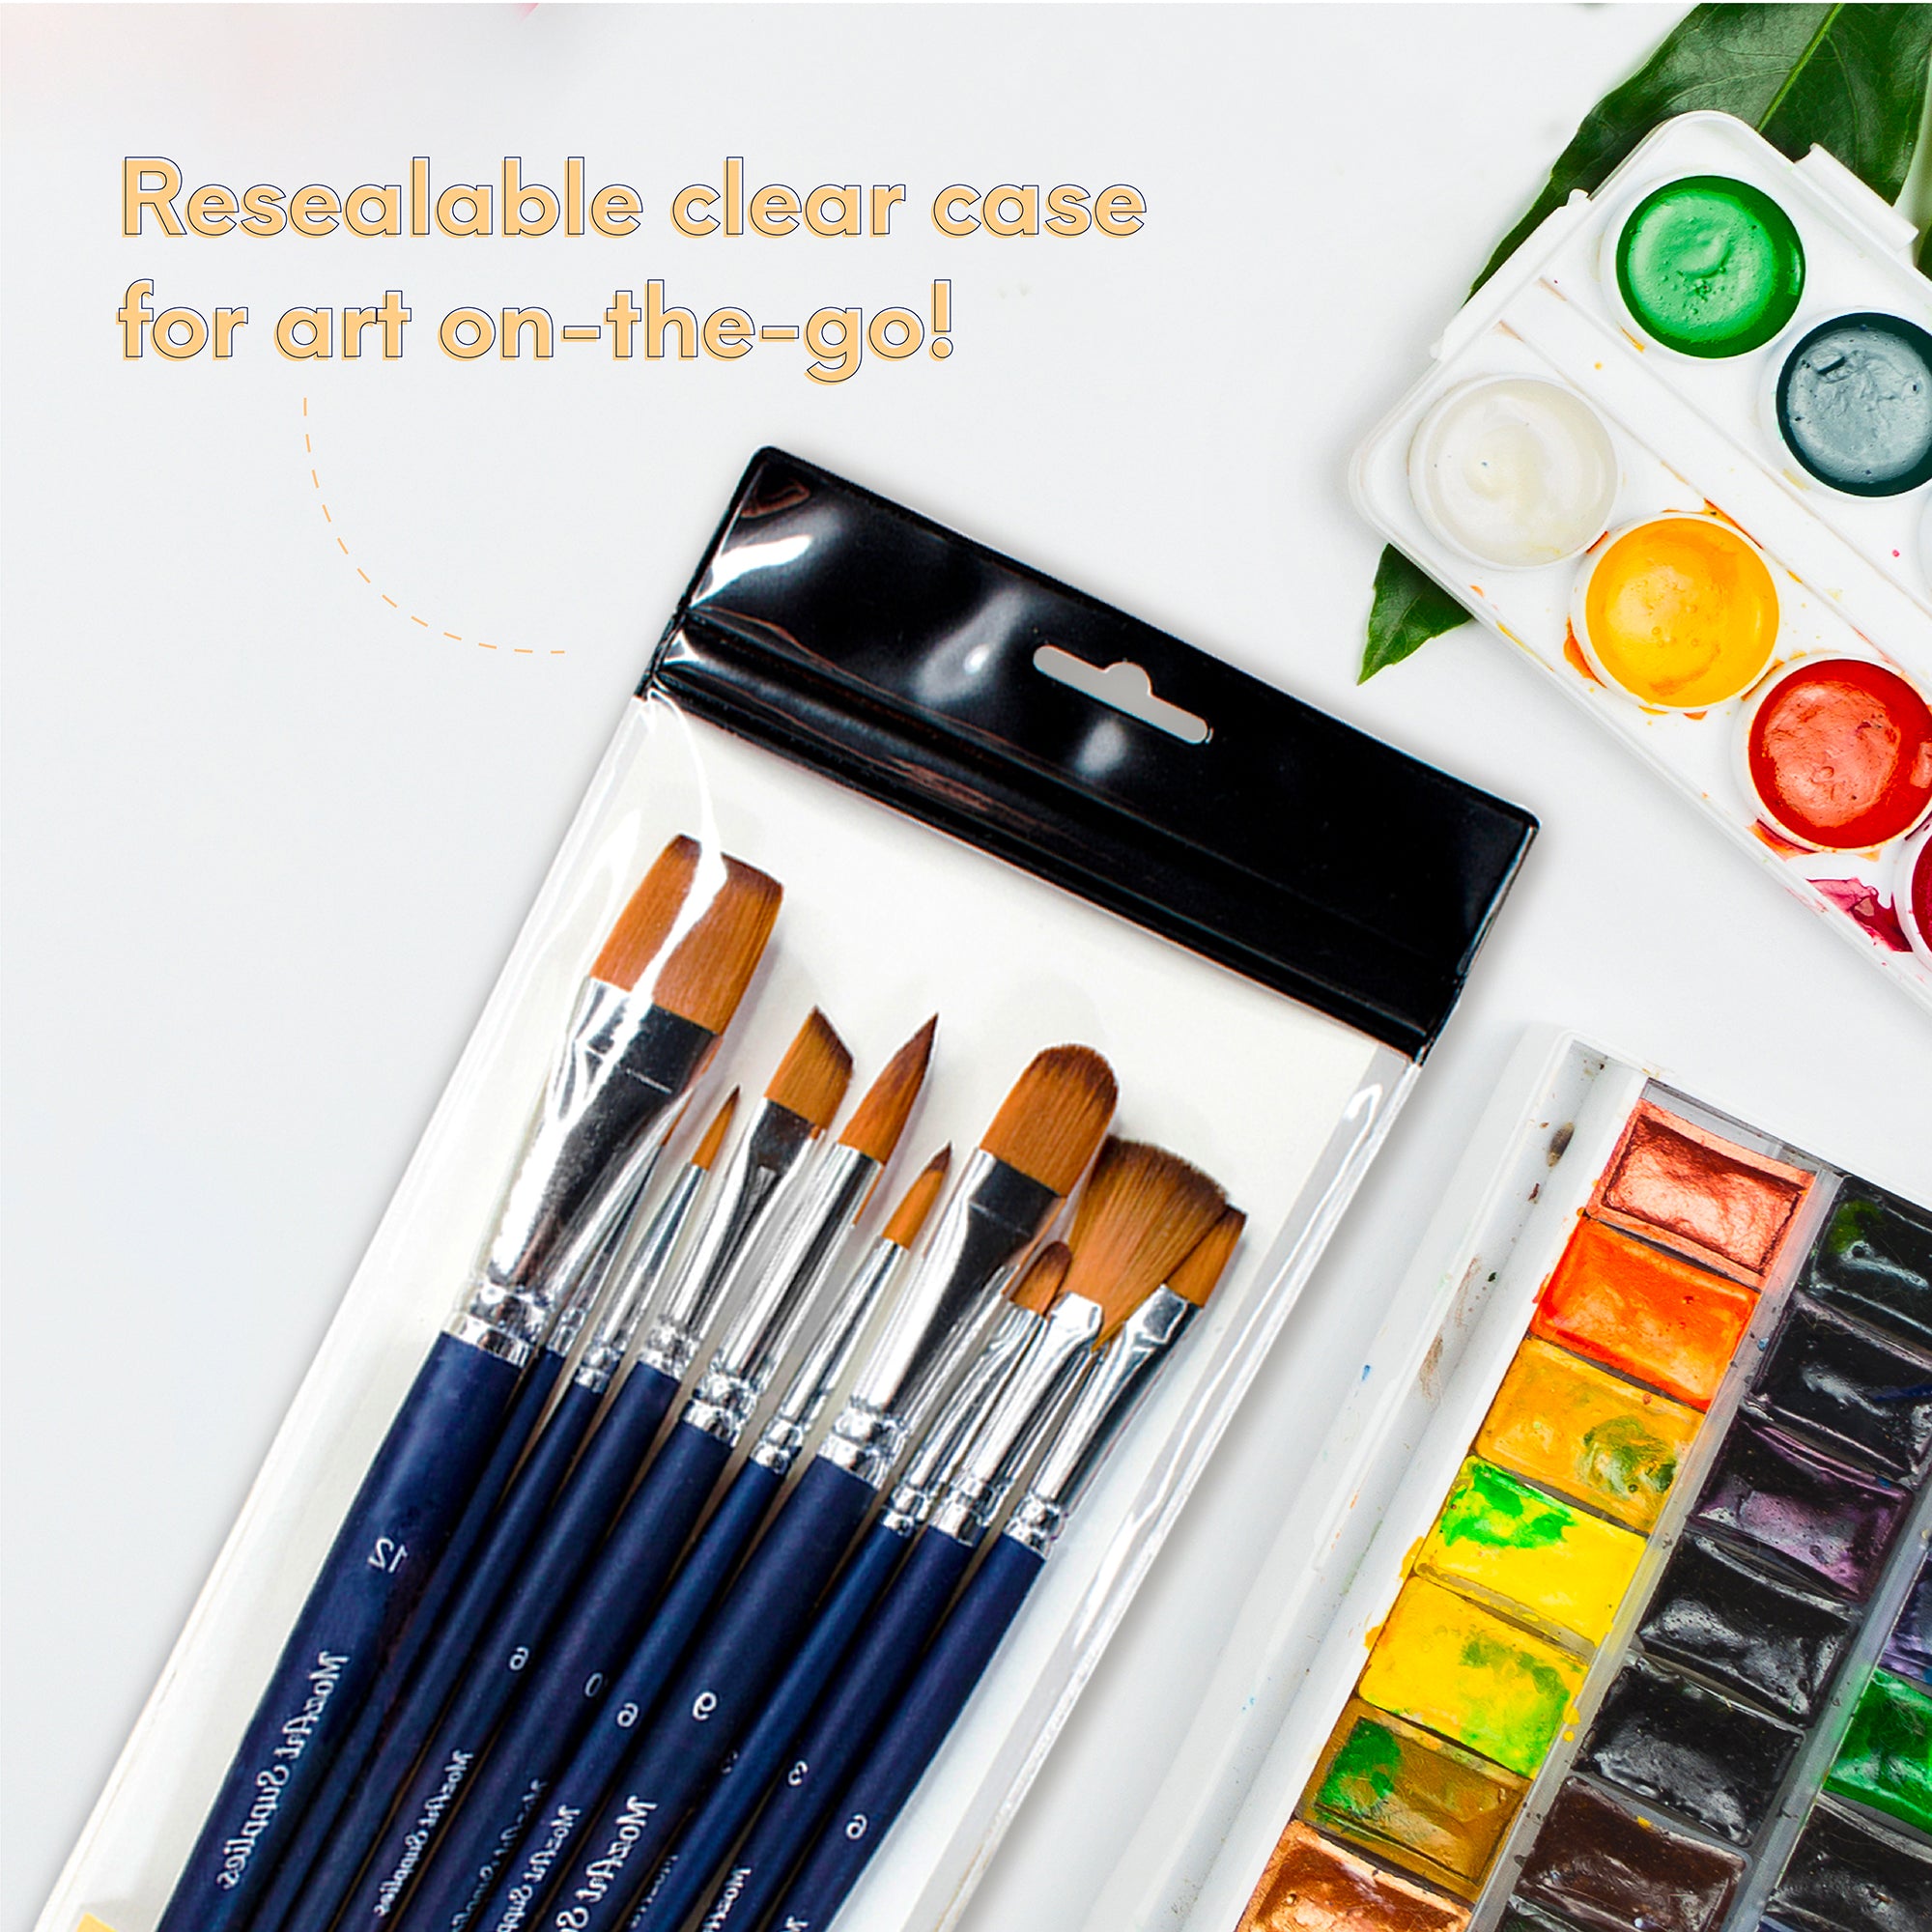 Art Brush Set , 15 Paint Brushes - FLS Discount Supplies